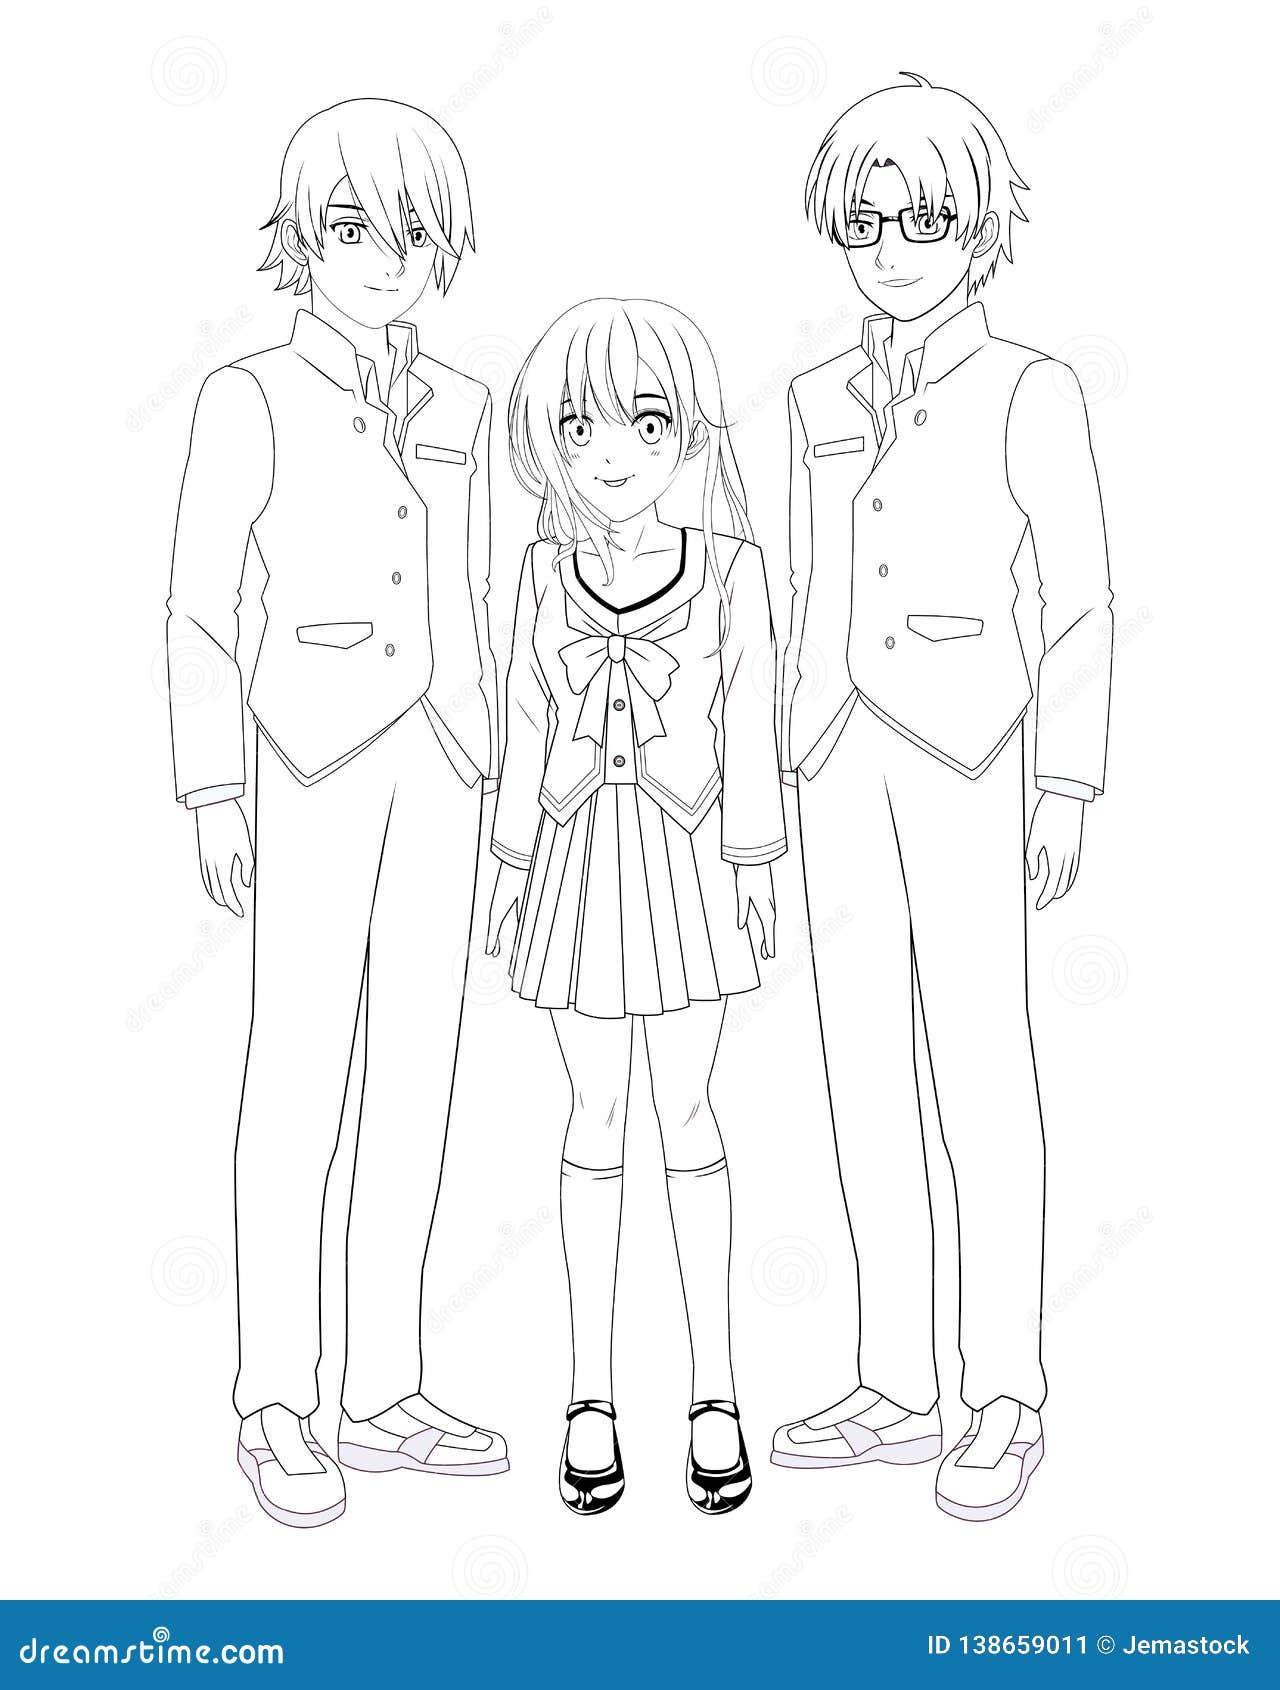 Anime manga group stock vector. Illustration of beauty - 138659011